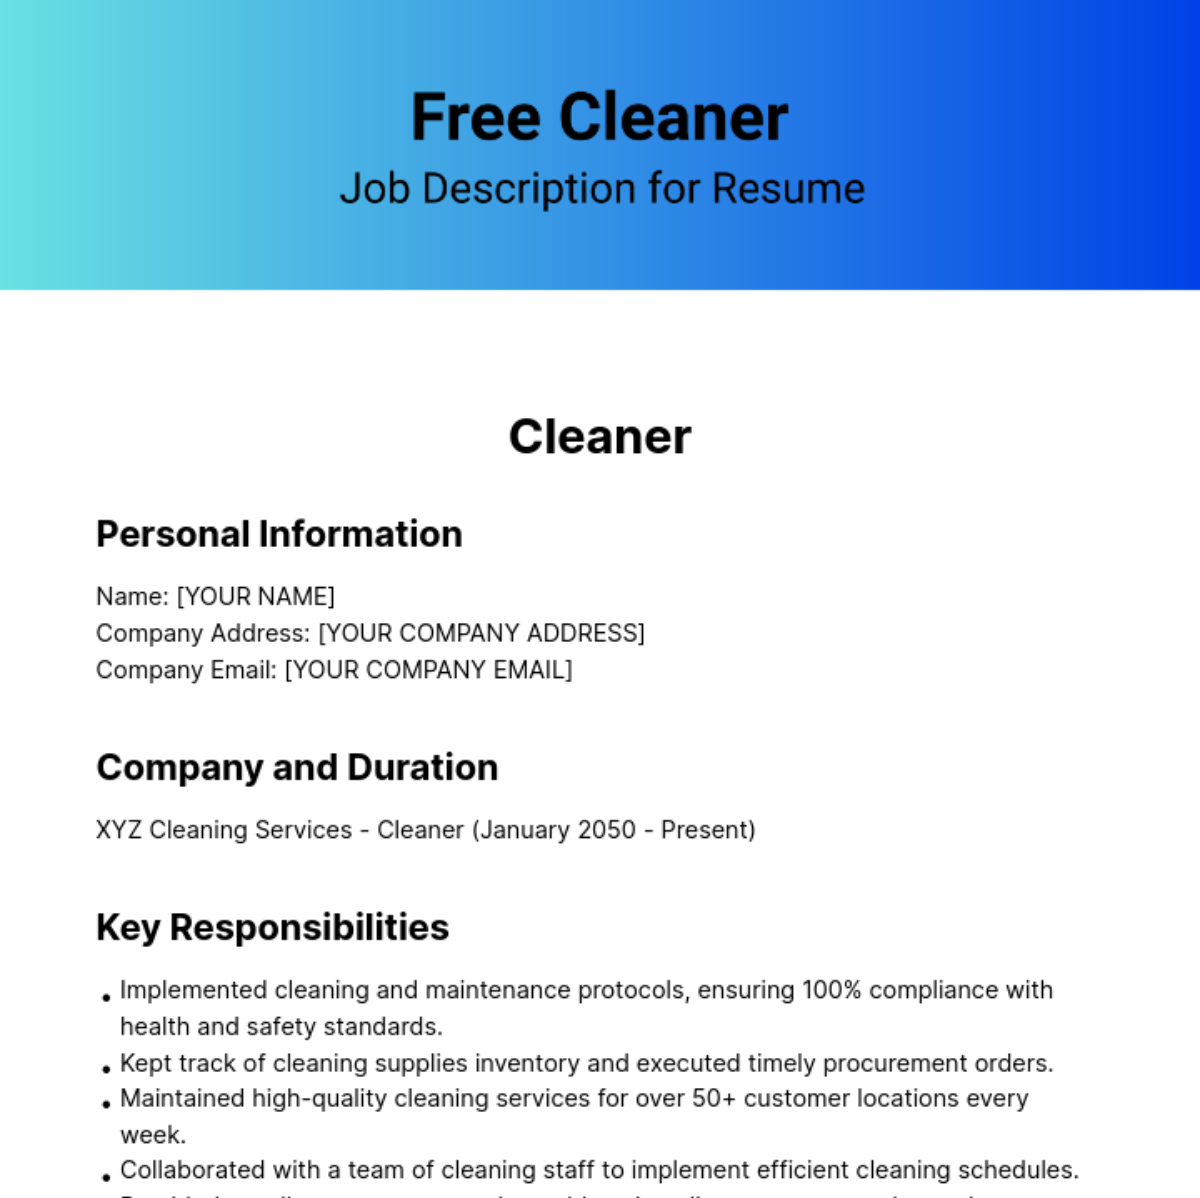 Cleaner Job Description for Resume Template